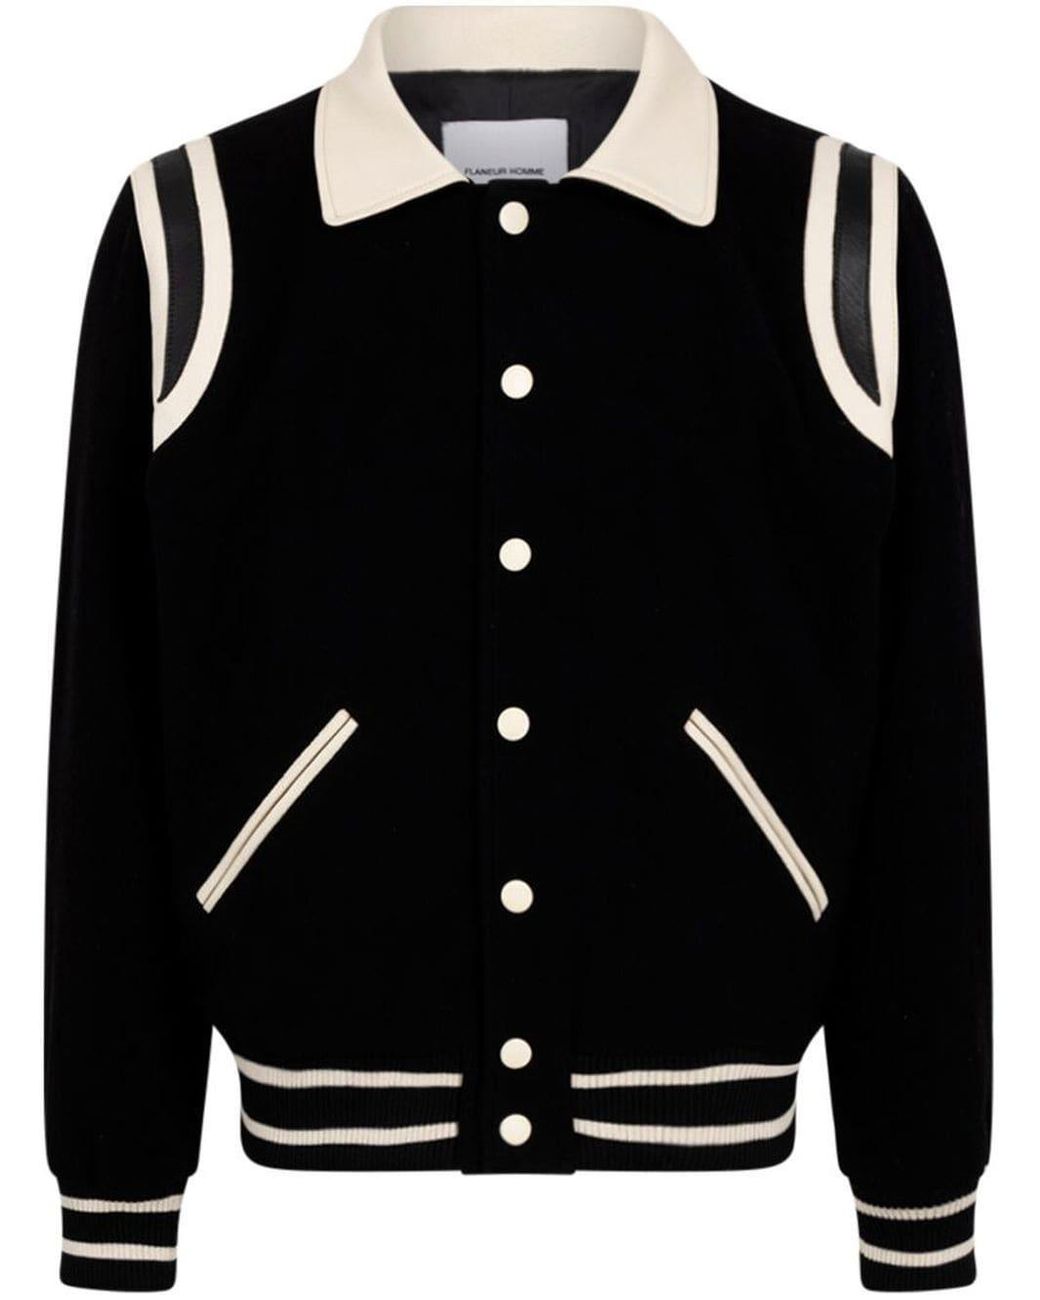 FLANEUR HOMME Teddy Collar Varsity Jacket in Black for Men | Lyst